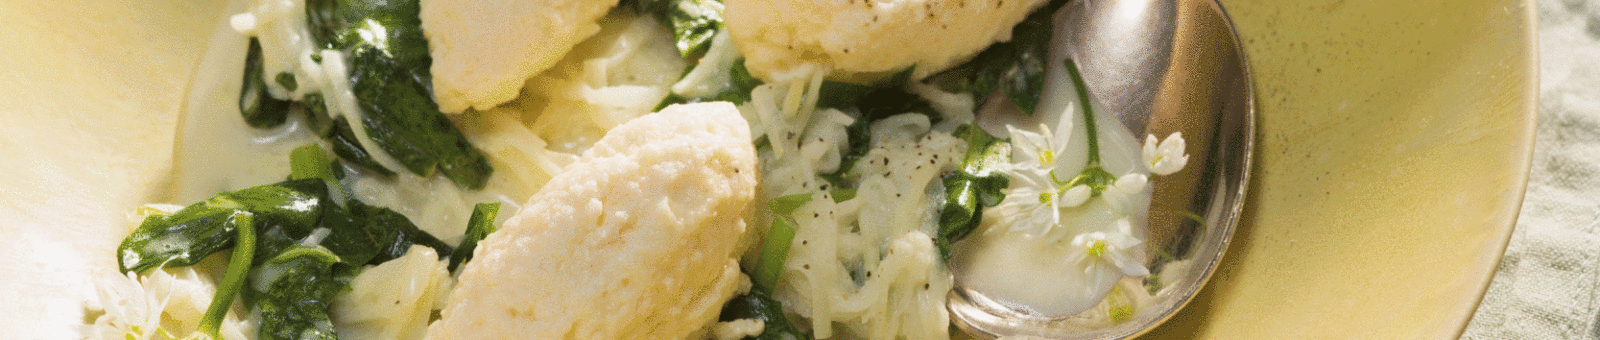     Curd dumplings with wild garlic cabbage turnip 